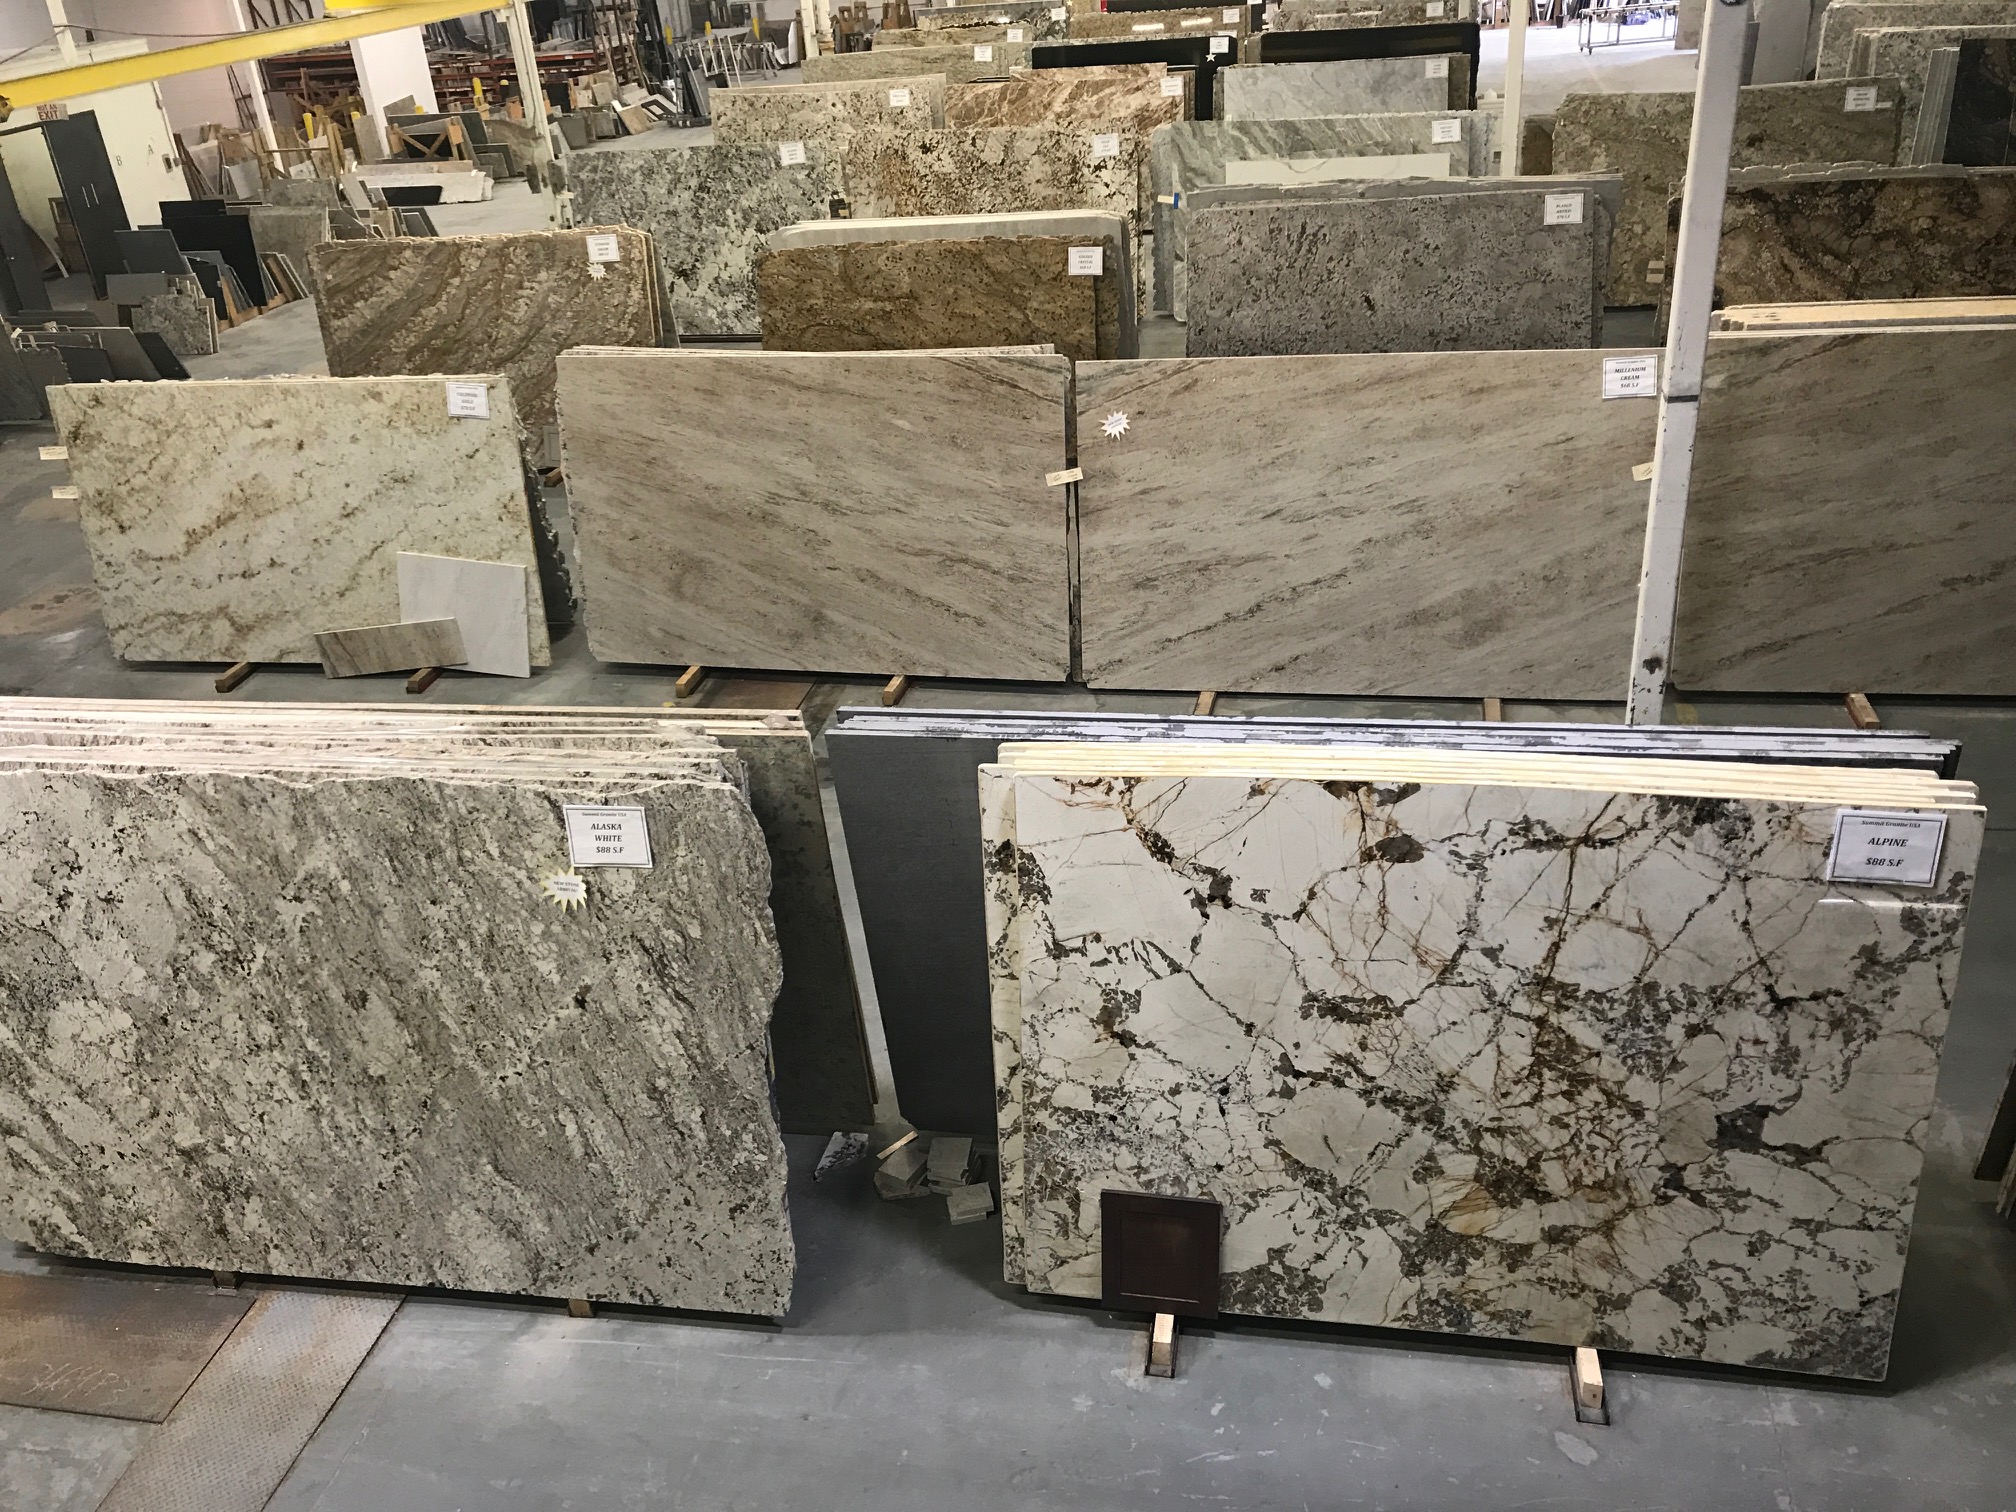 Summit granite slabs to become granite countertops